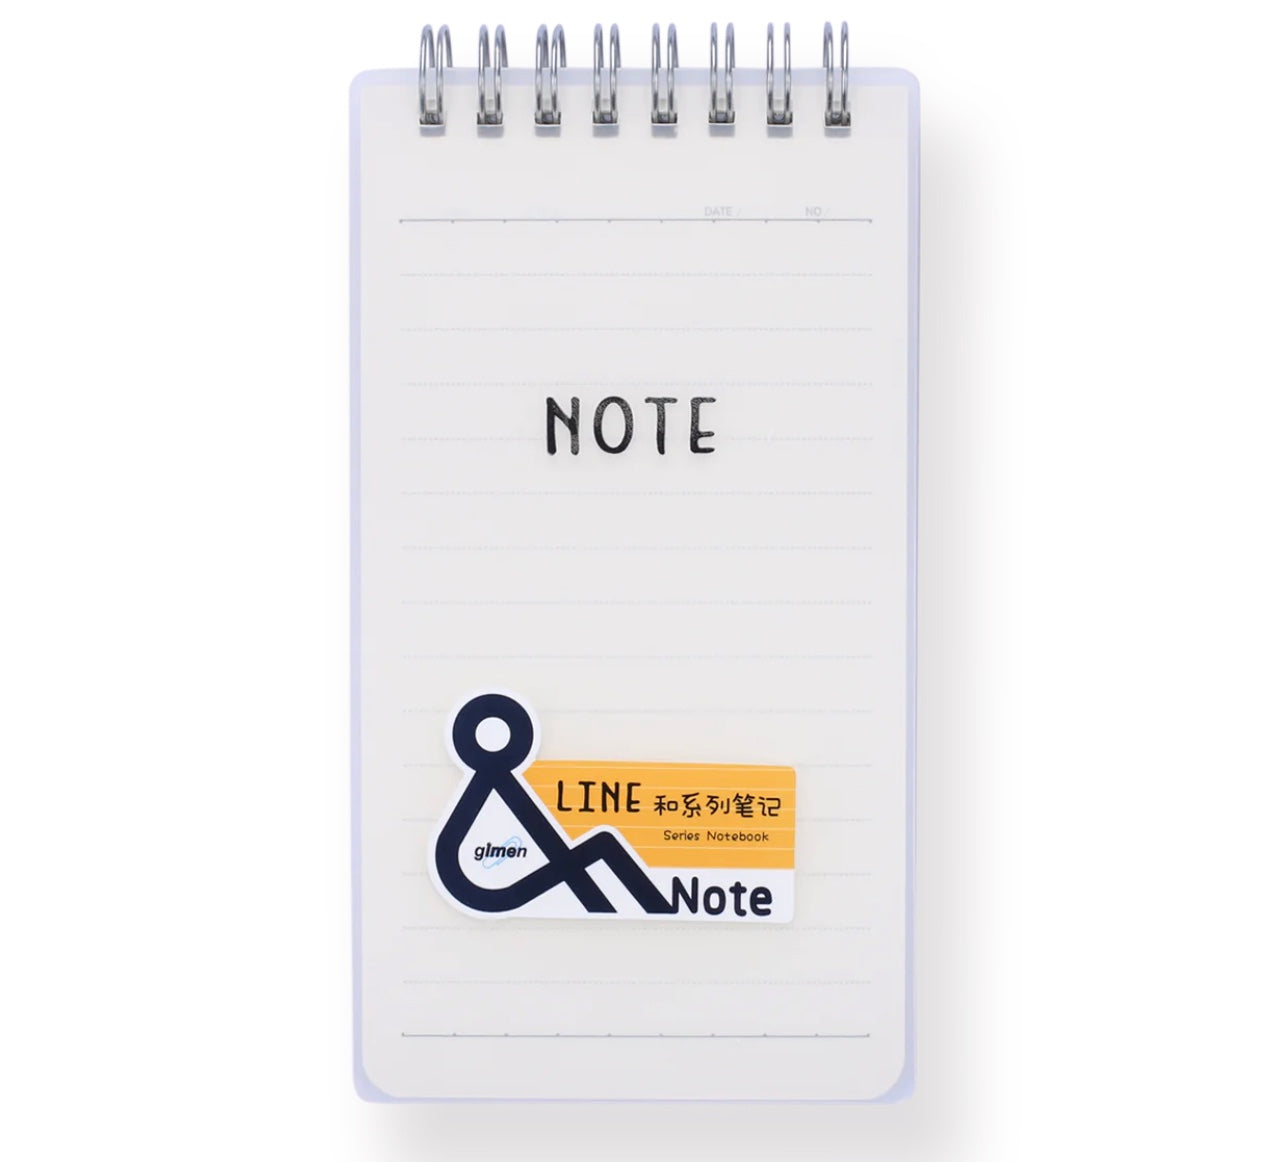 Minimalist To-Do List Style Notebook